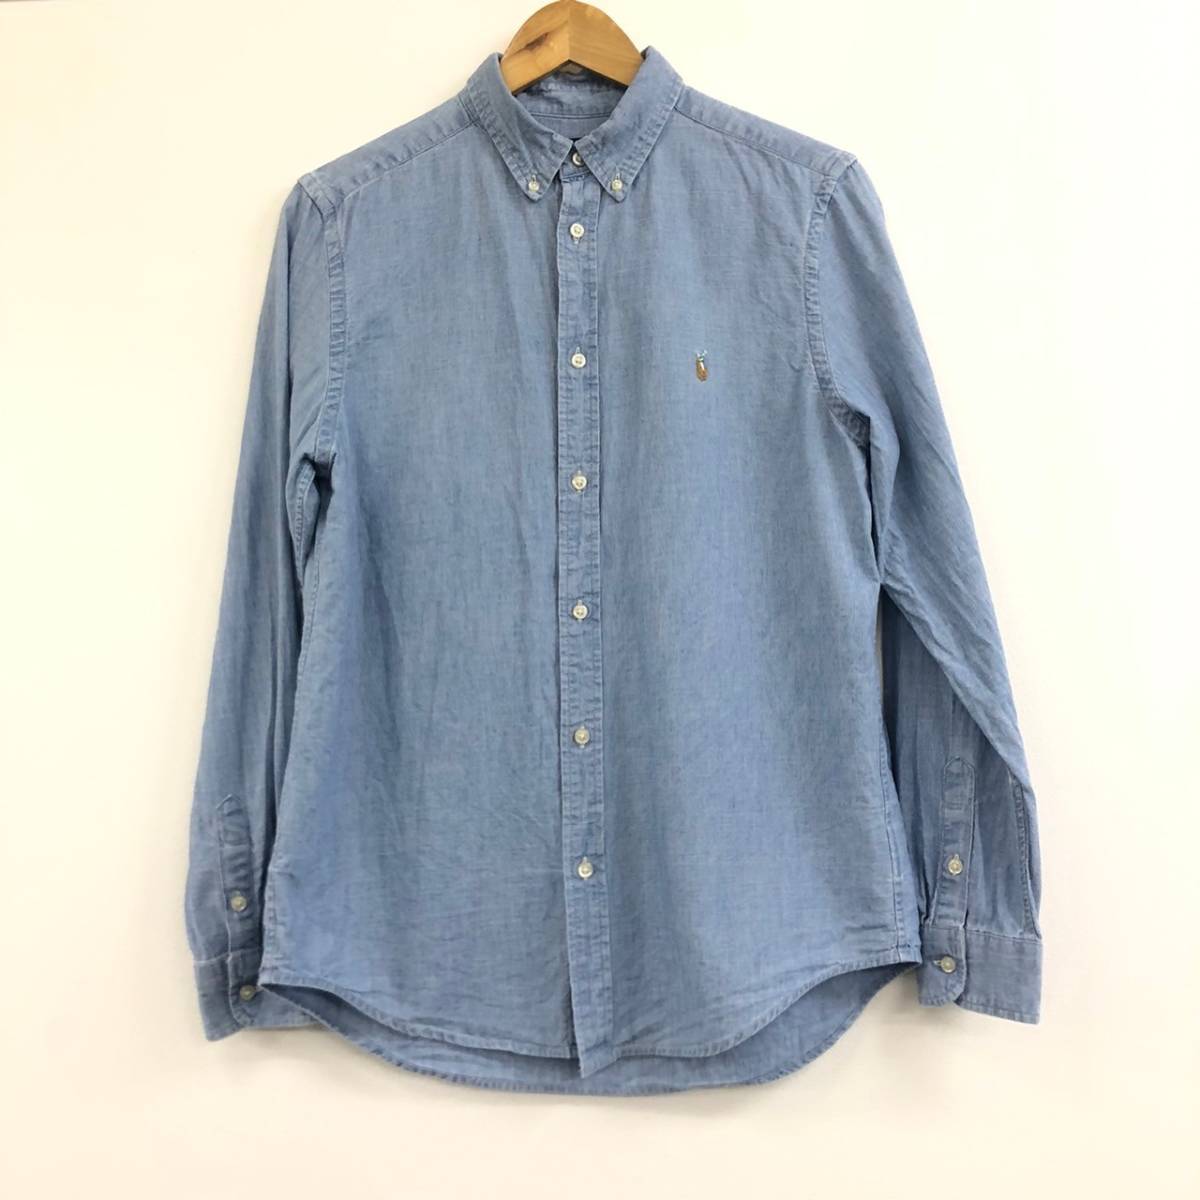 *RALPH LAUREN long sleeve shirt XL(18-20) light blue Ralph Lauren Junior Logo embroidery Denim style two or more successful bids including in a package OK B240131-6*